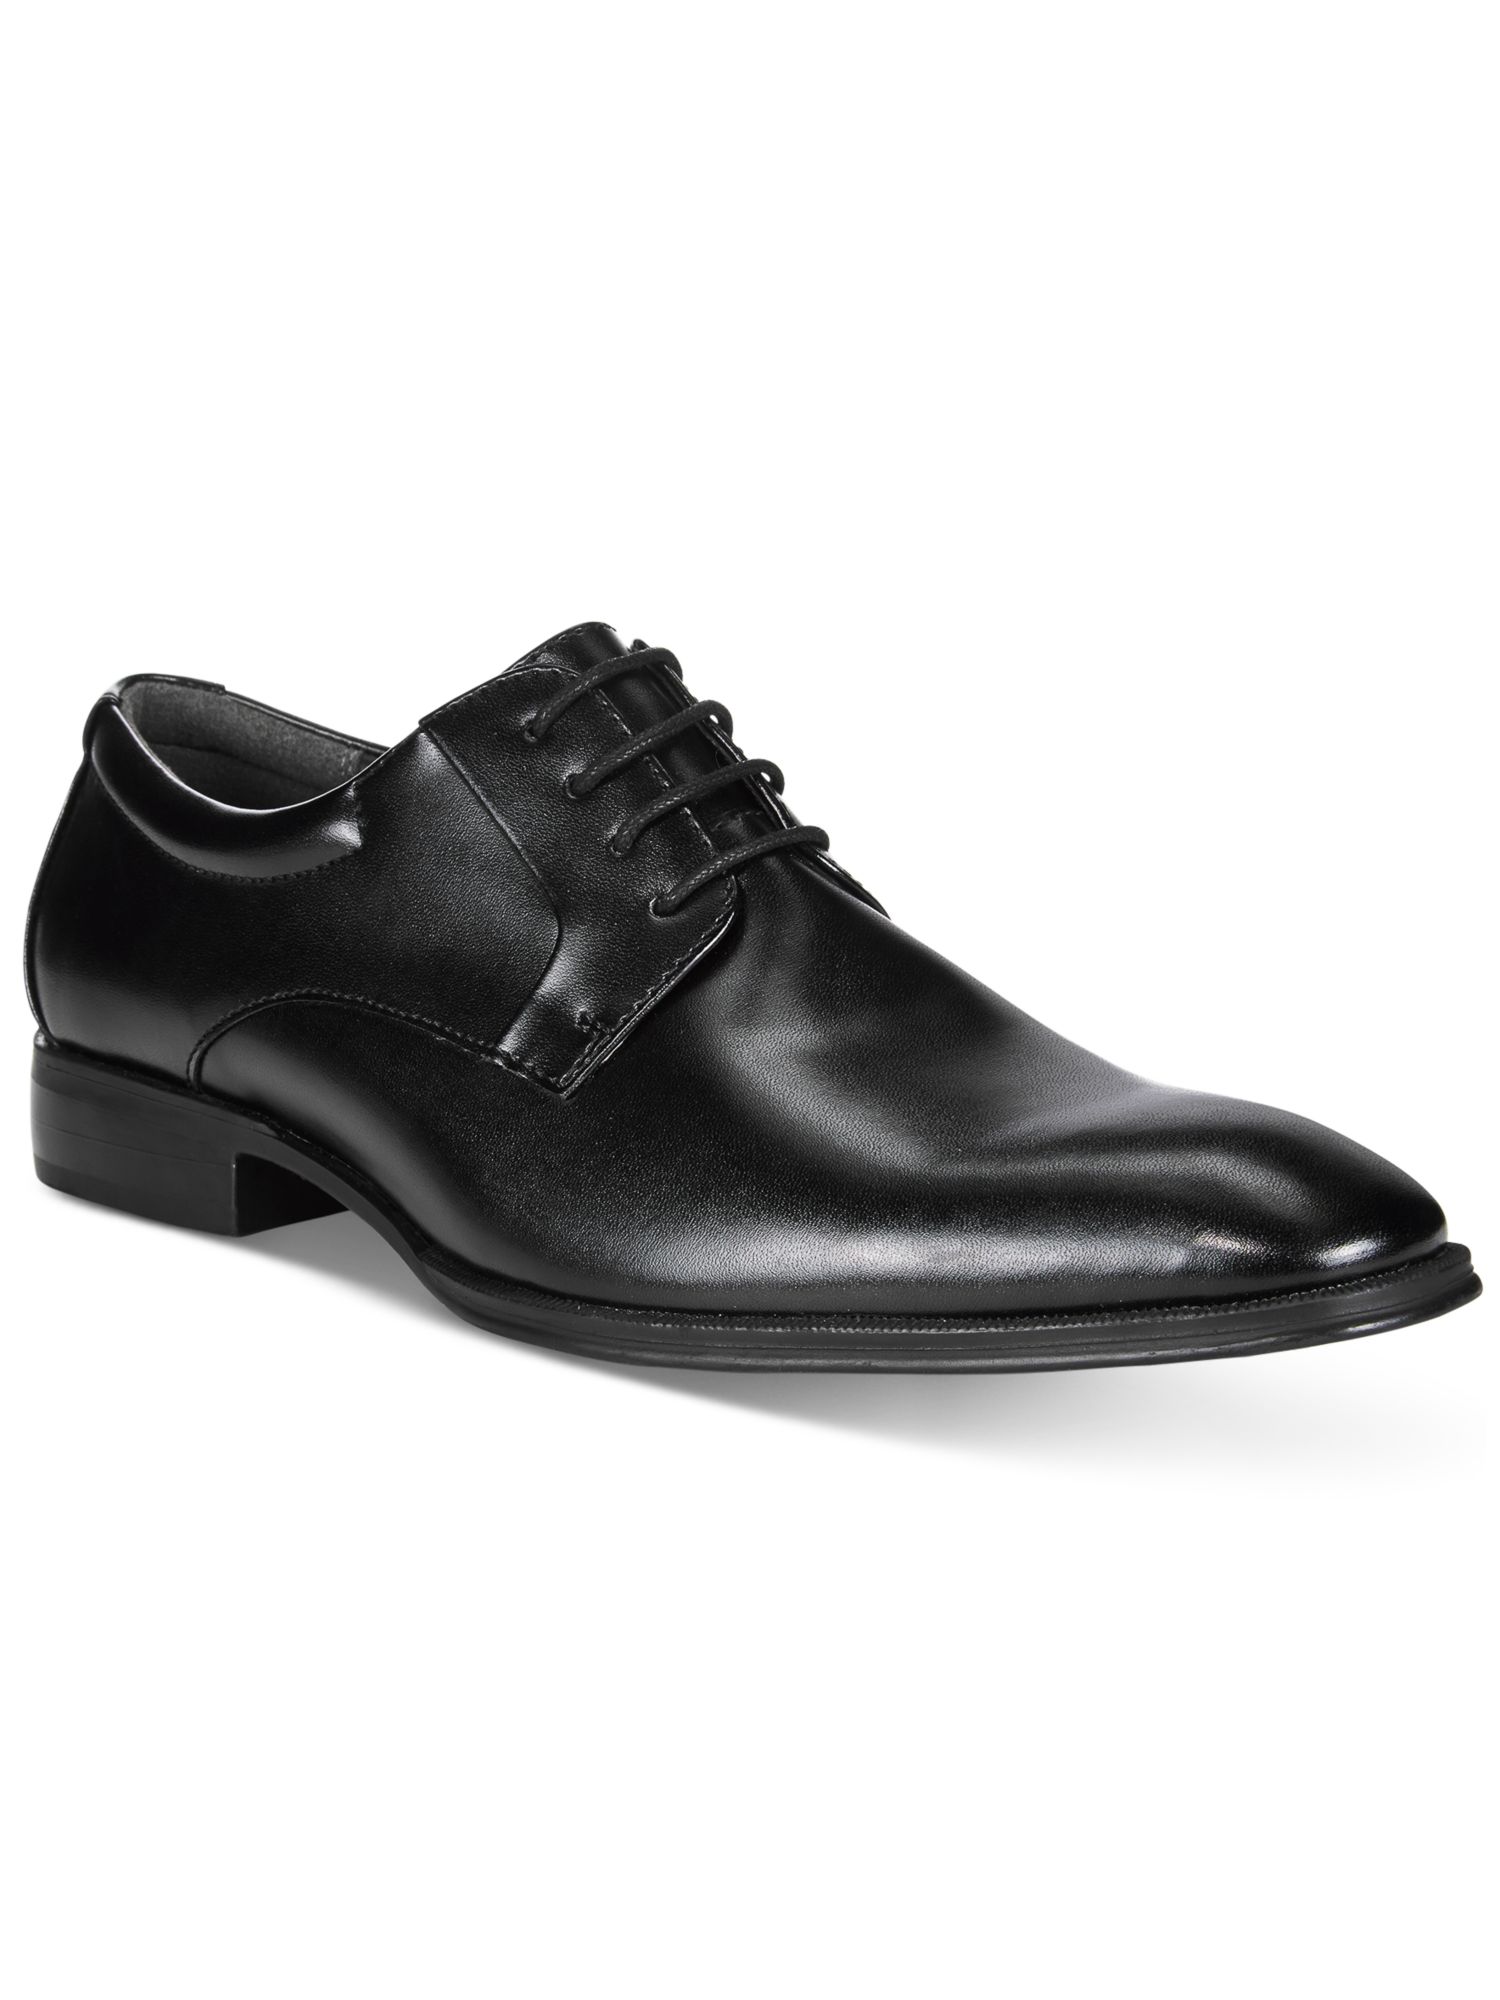 ALFANI Mens Black Padded Andrew Round Toe Block Heel Lace-Up Oxford Shoes 7 M